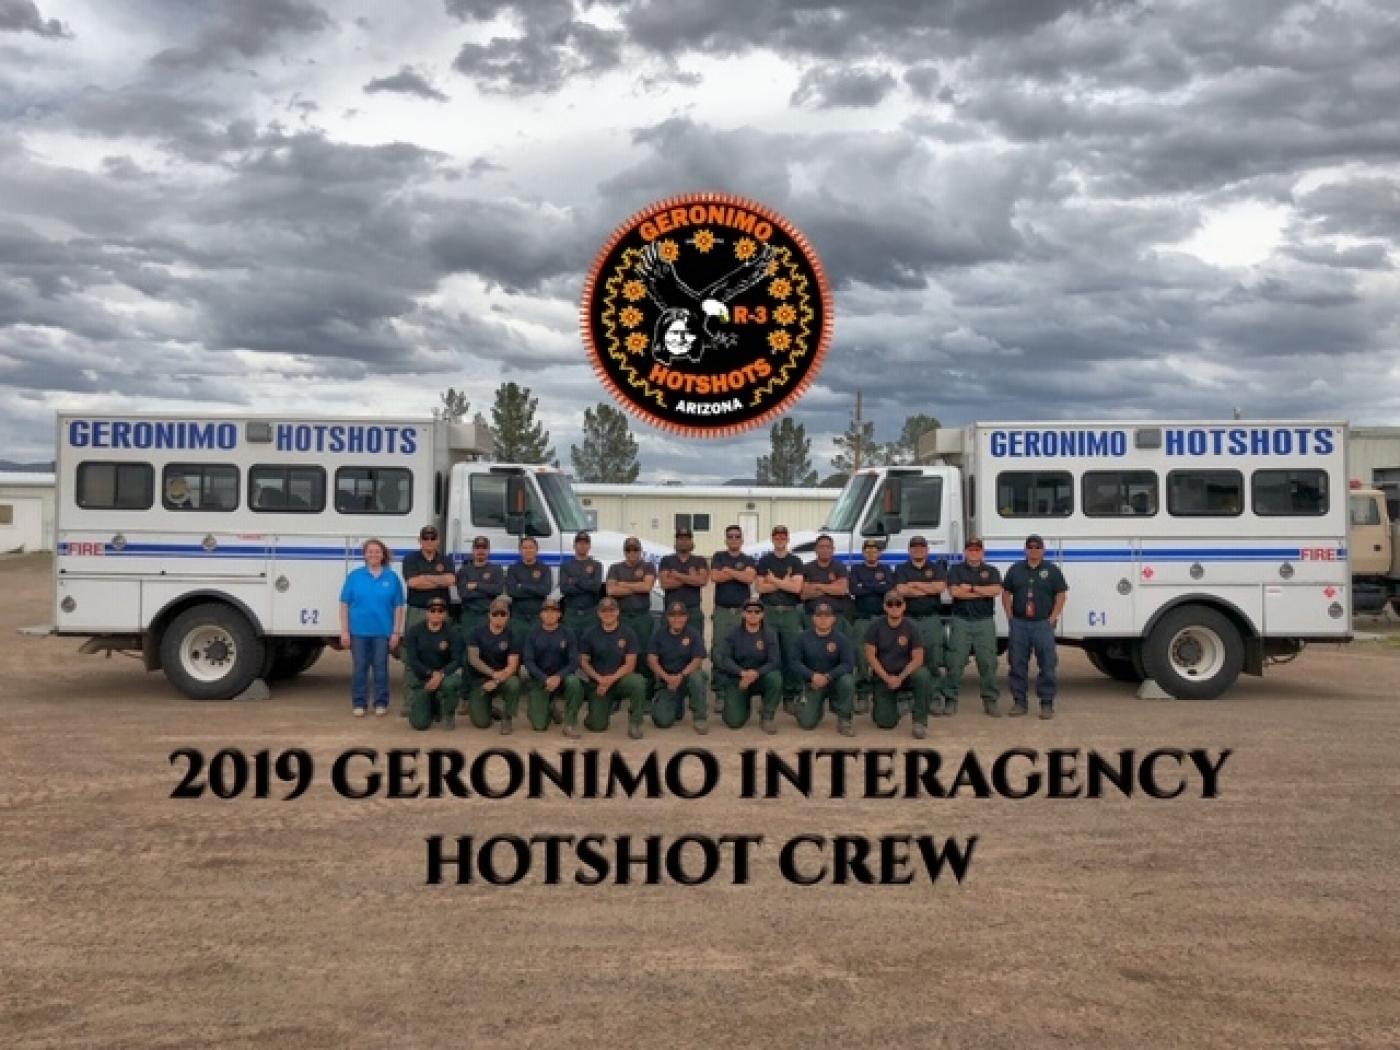 Geronimo hotshot crew photo, 2019